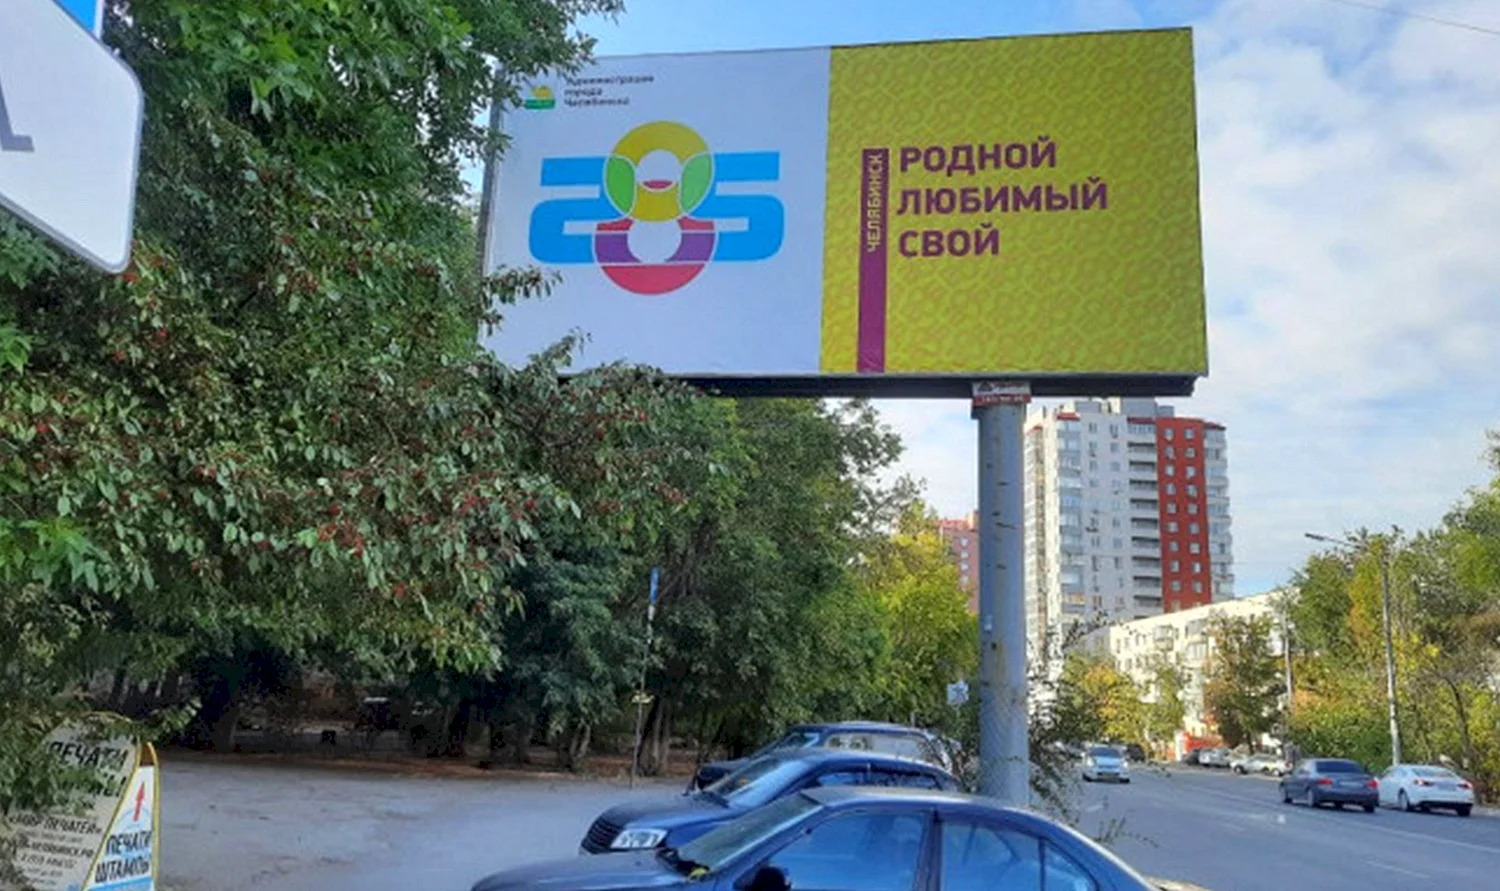 Логотип Челябинска к 285 летию города